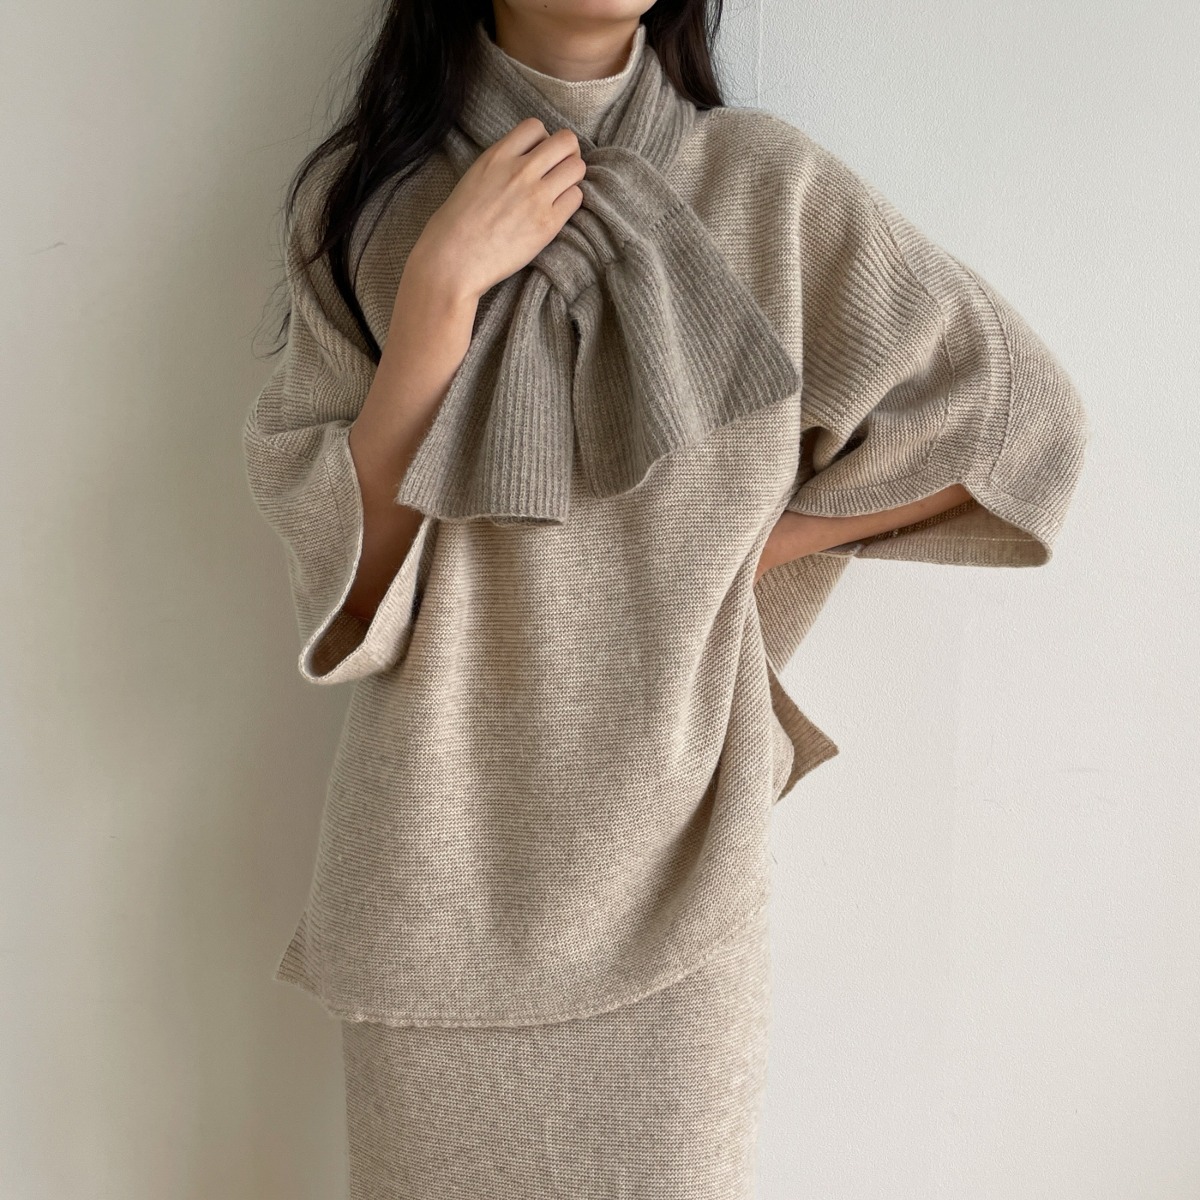 Whole garment Fox wool vanilla knit muffler (fine merino wool)